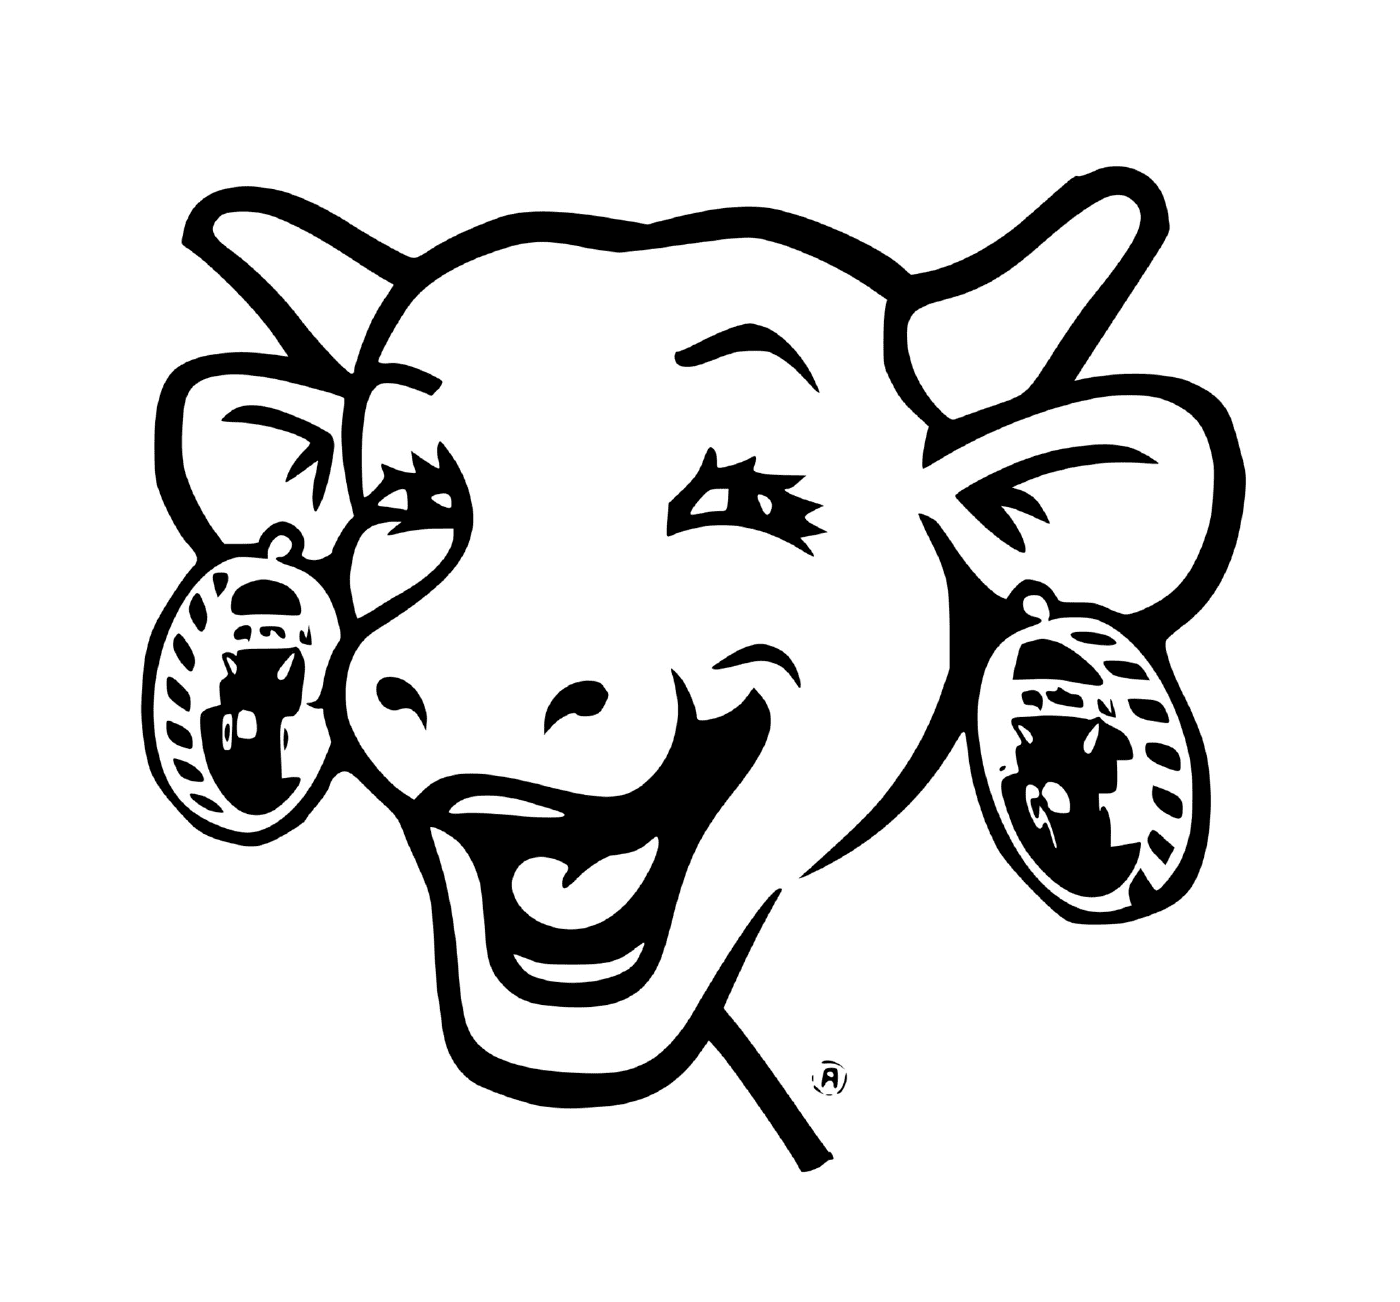  Die lachende Kuh 